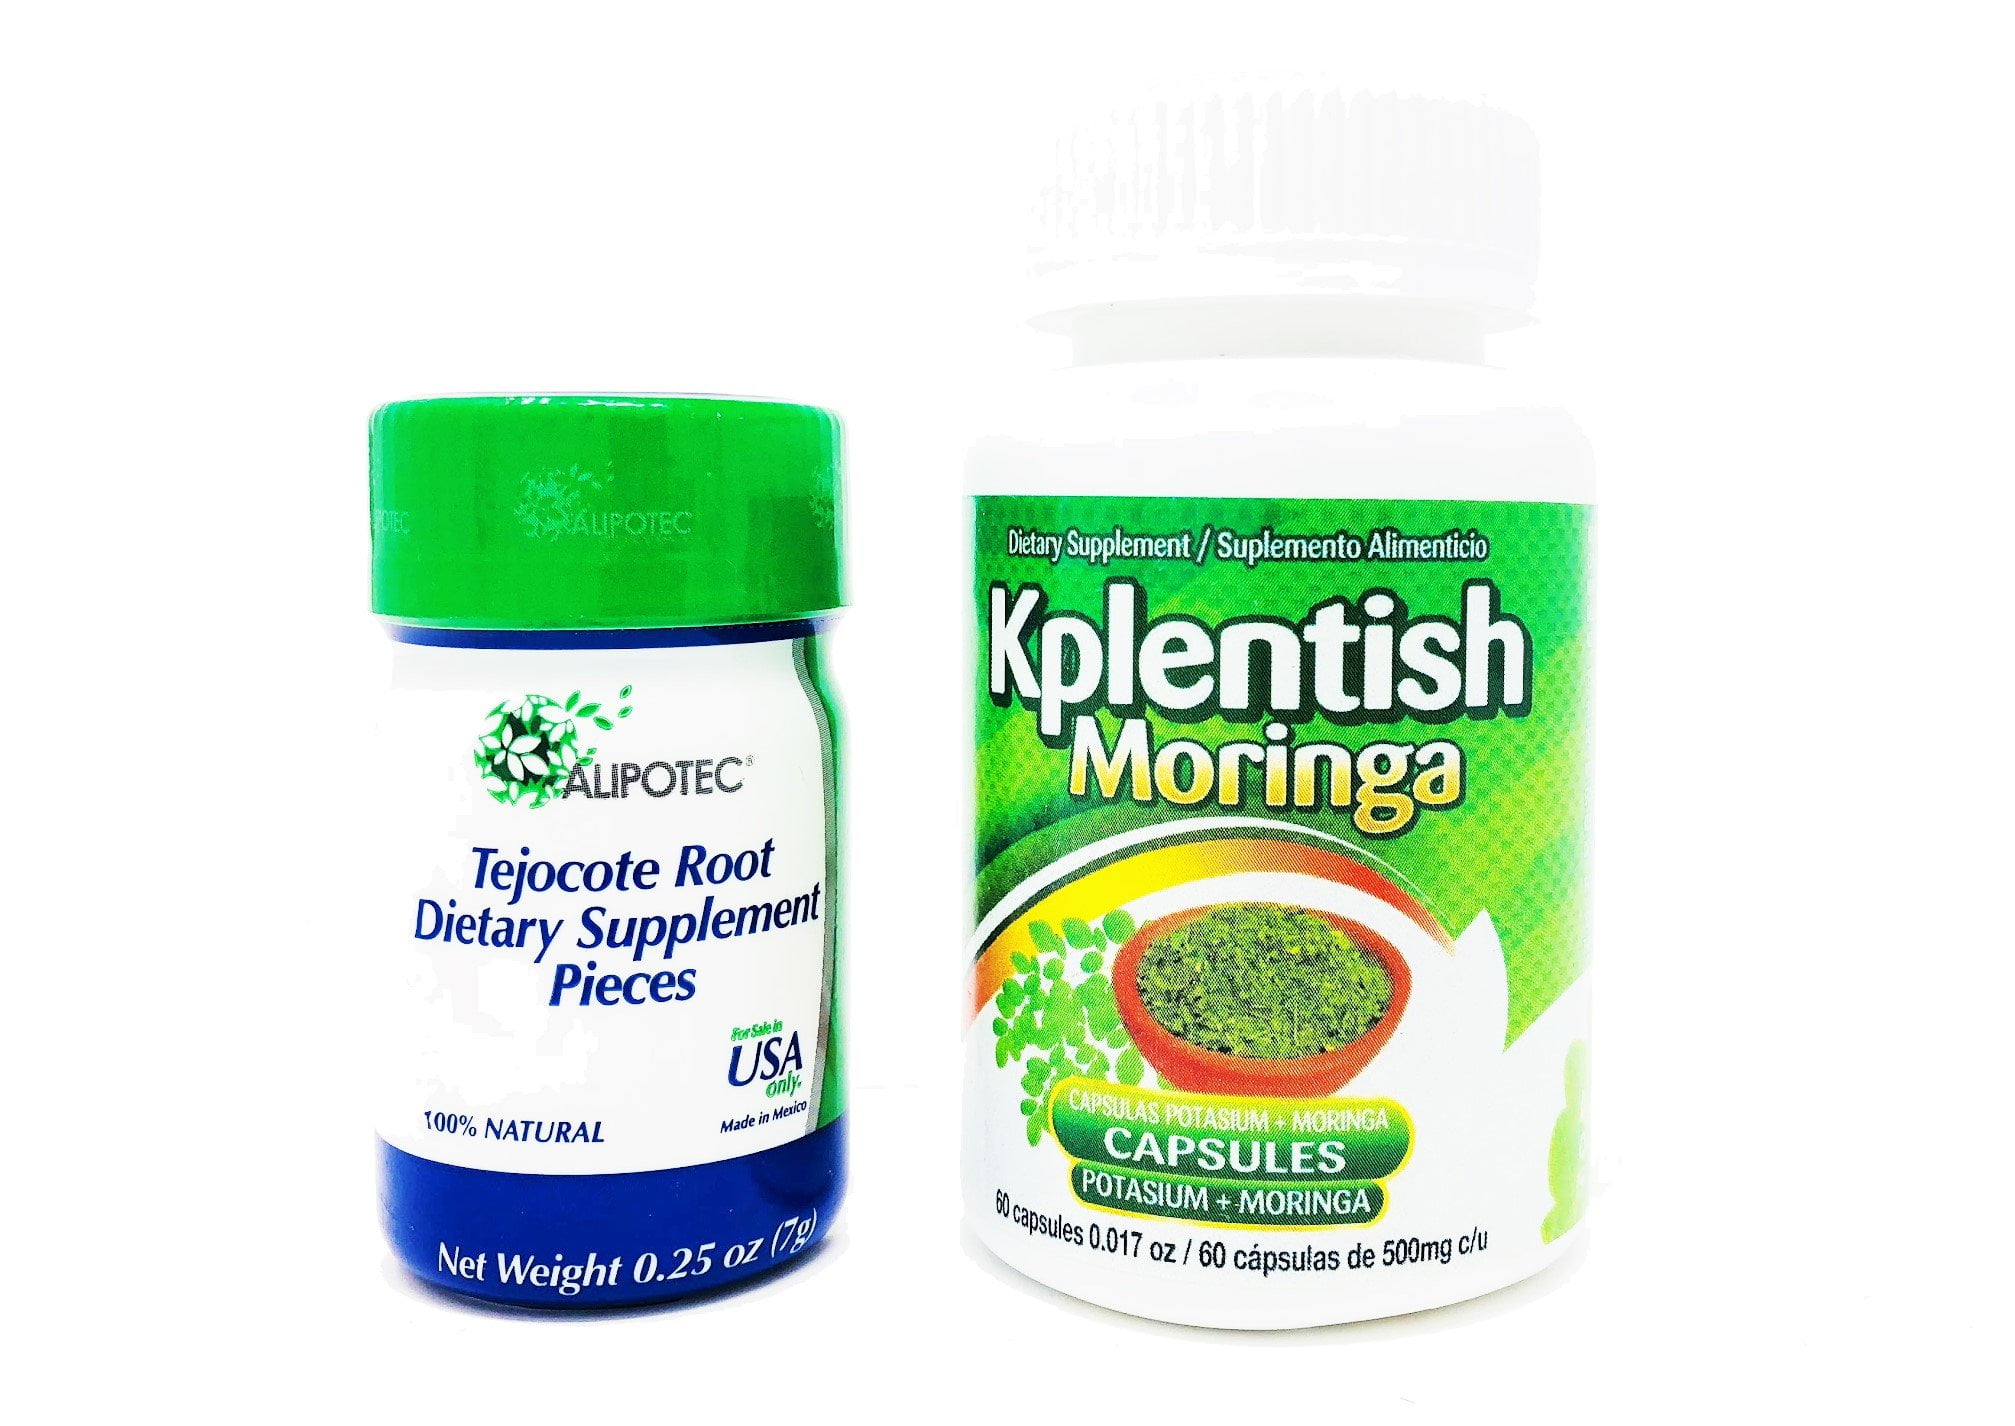 Alipotec Root Raiz de Tejocote 90 Day Supply and 30 Day KPlentish Moringa Potassium Supplement 2 Product Pack